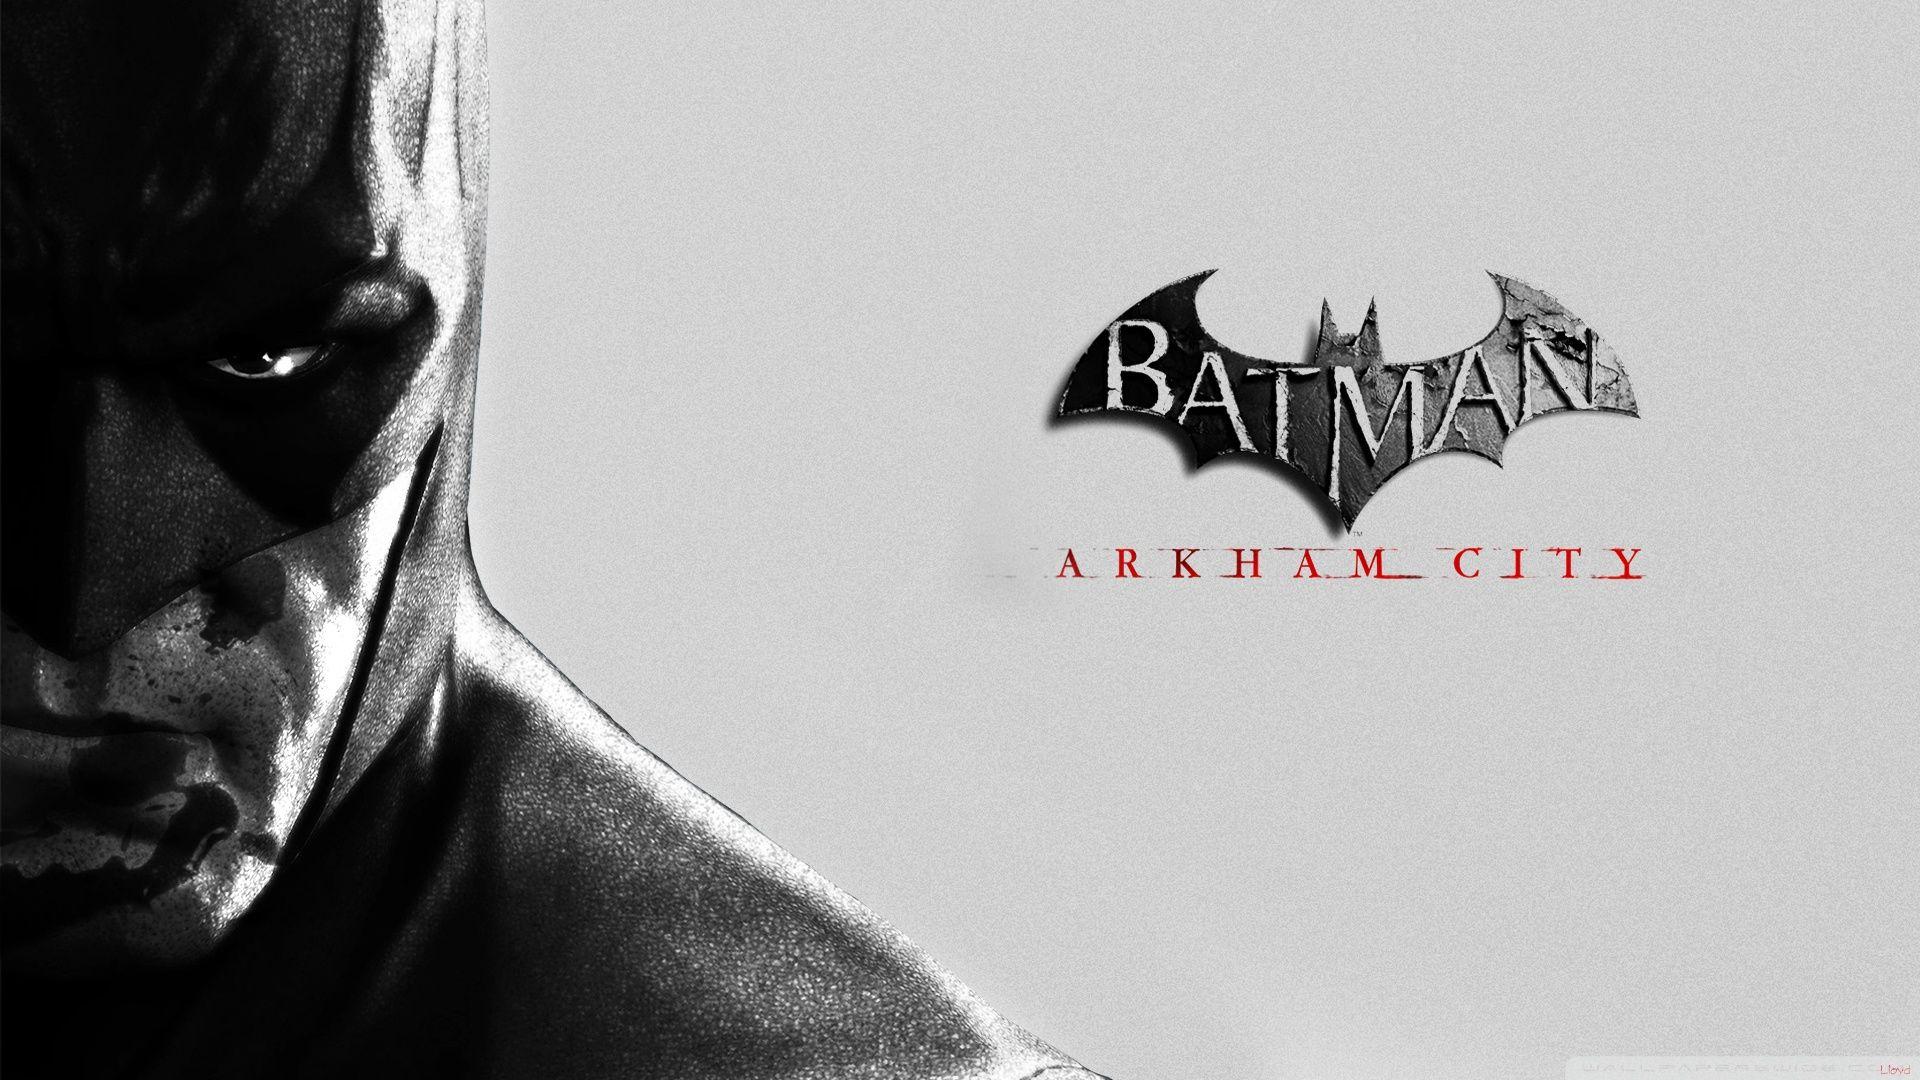 Batman Arkham Asylum Batman Logo - Review) Batman: Arkham City (PS3). I Am Your Target Demographic